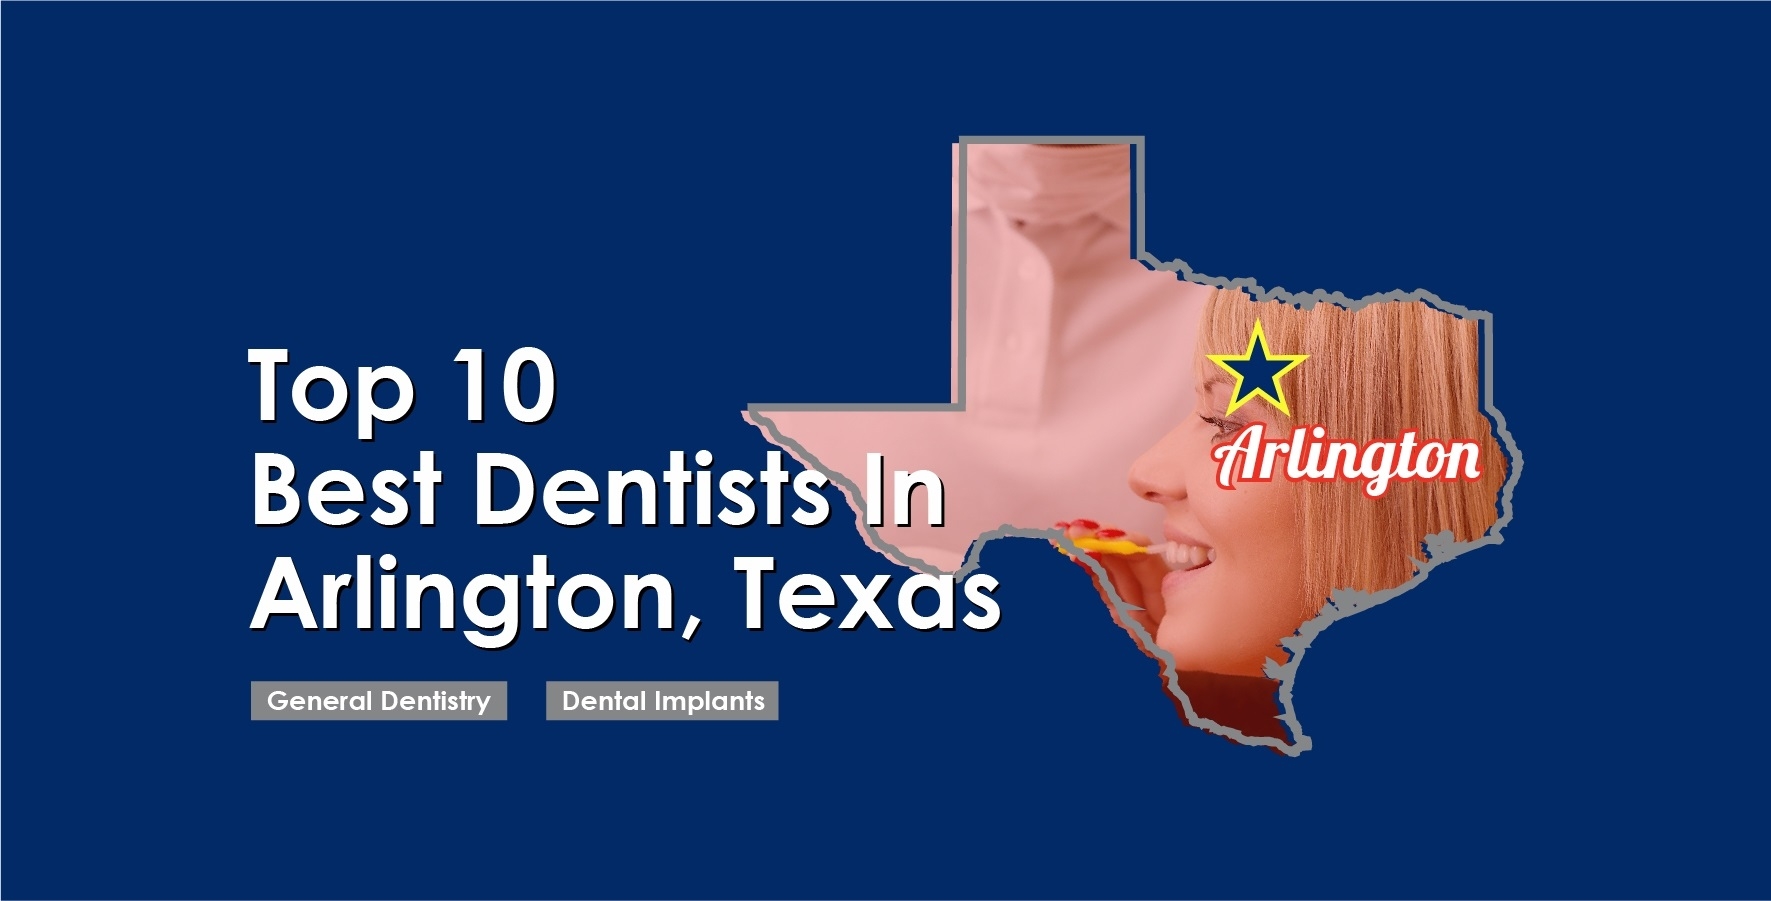 Top 10 Best Dentists Arlington